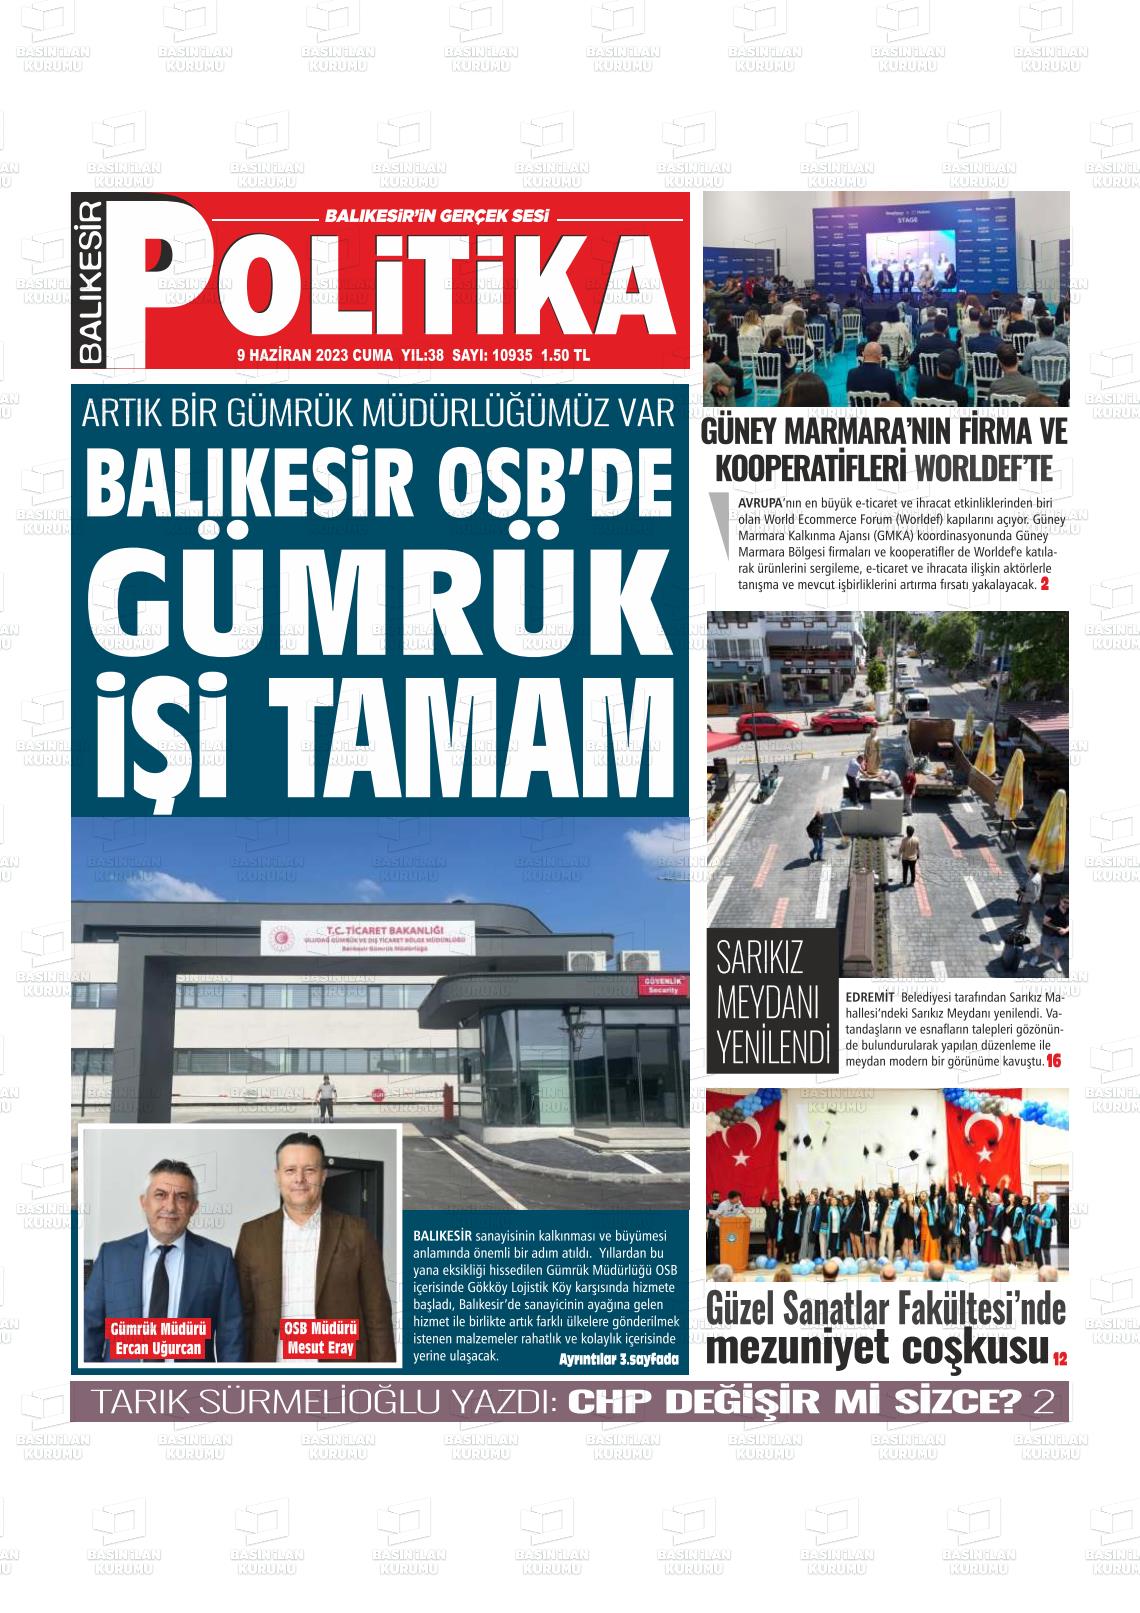 09 Haziran 2023 Balıkesir Politika Gazete Manşeti